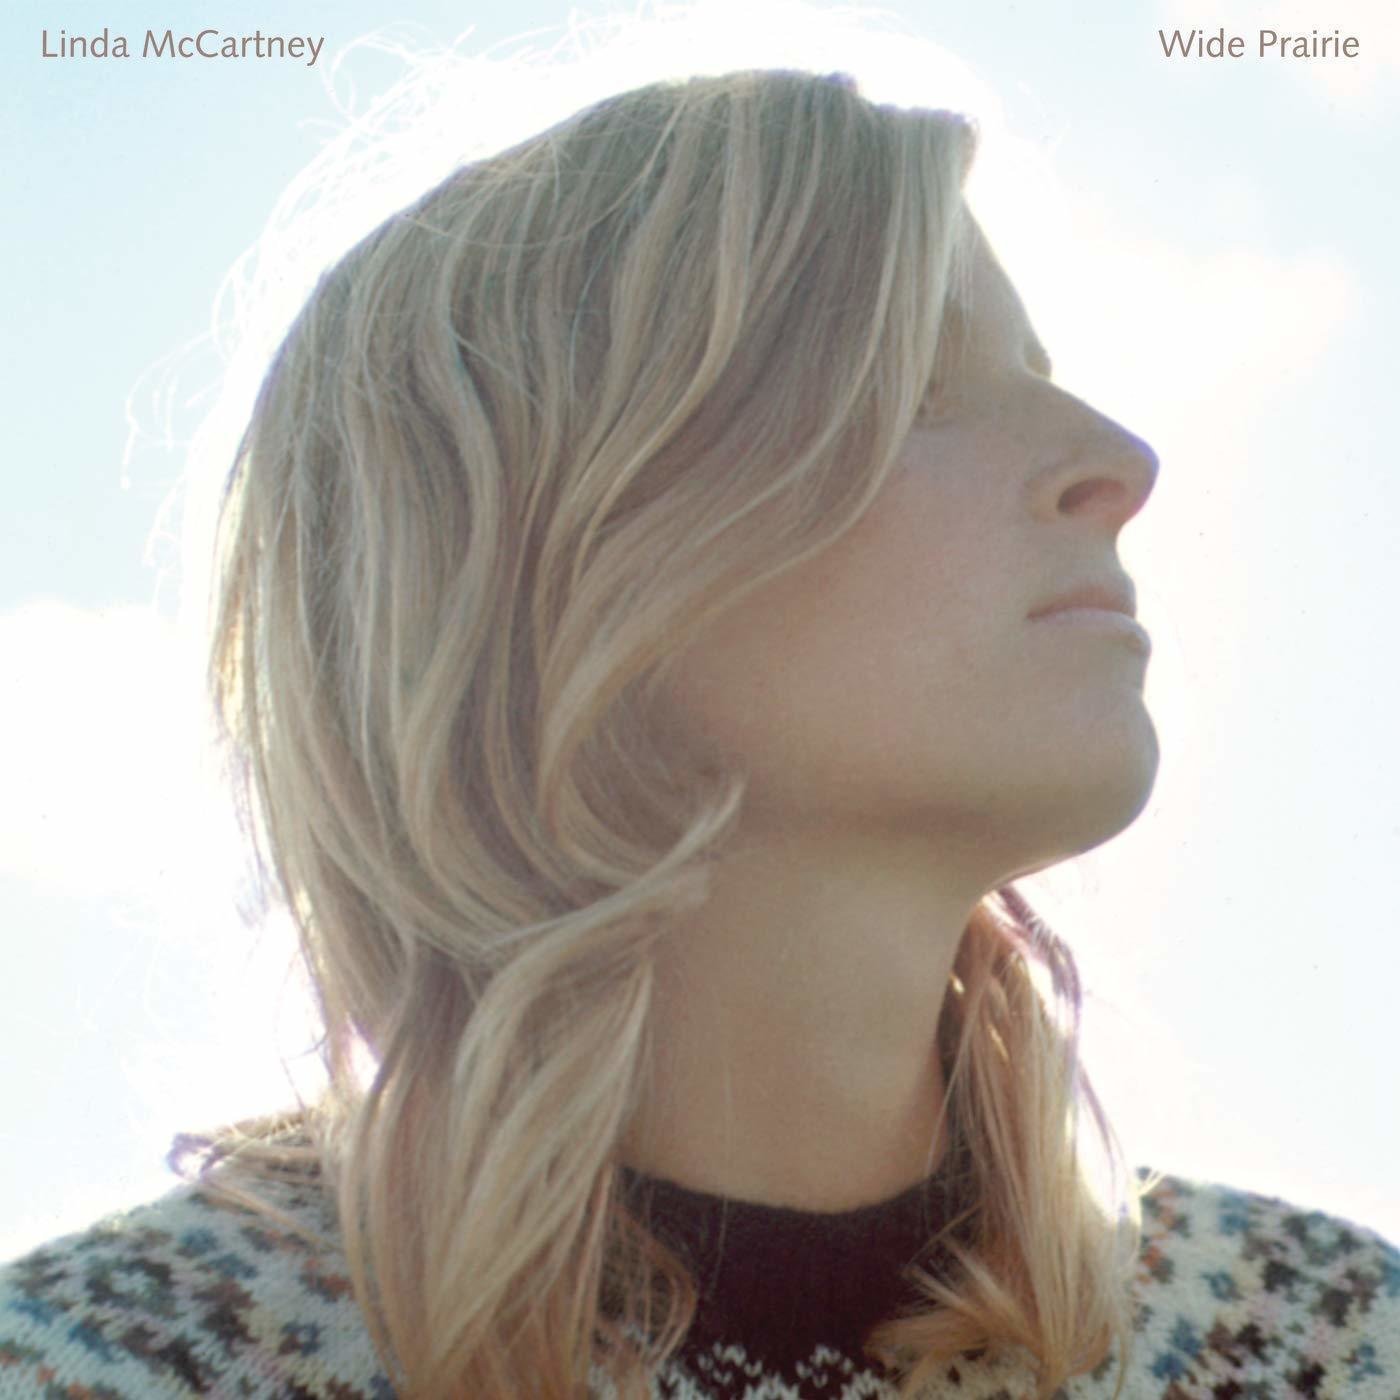 Disque vinyle Linda McCartney - Wide Prairie (LP)